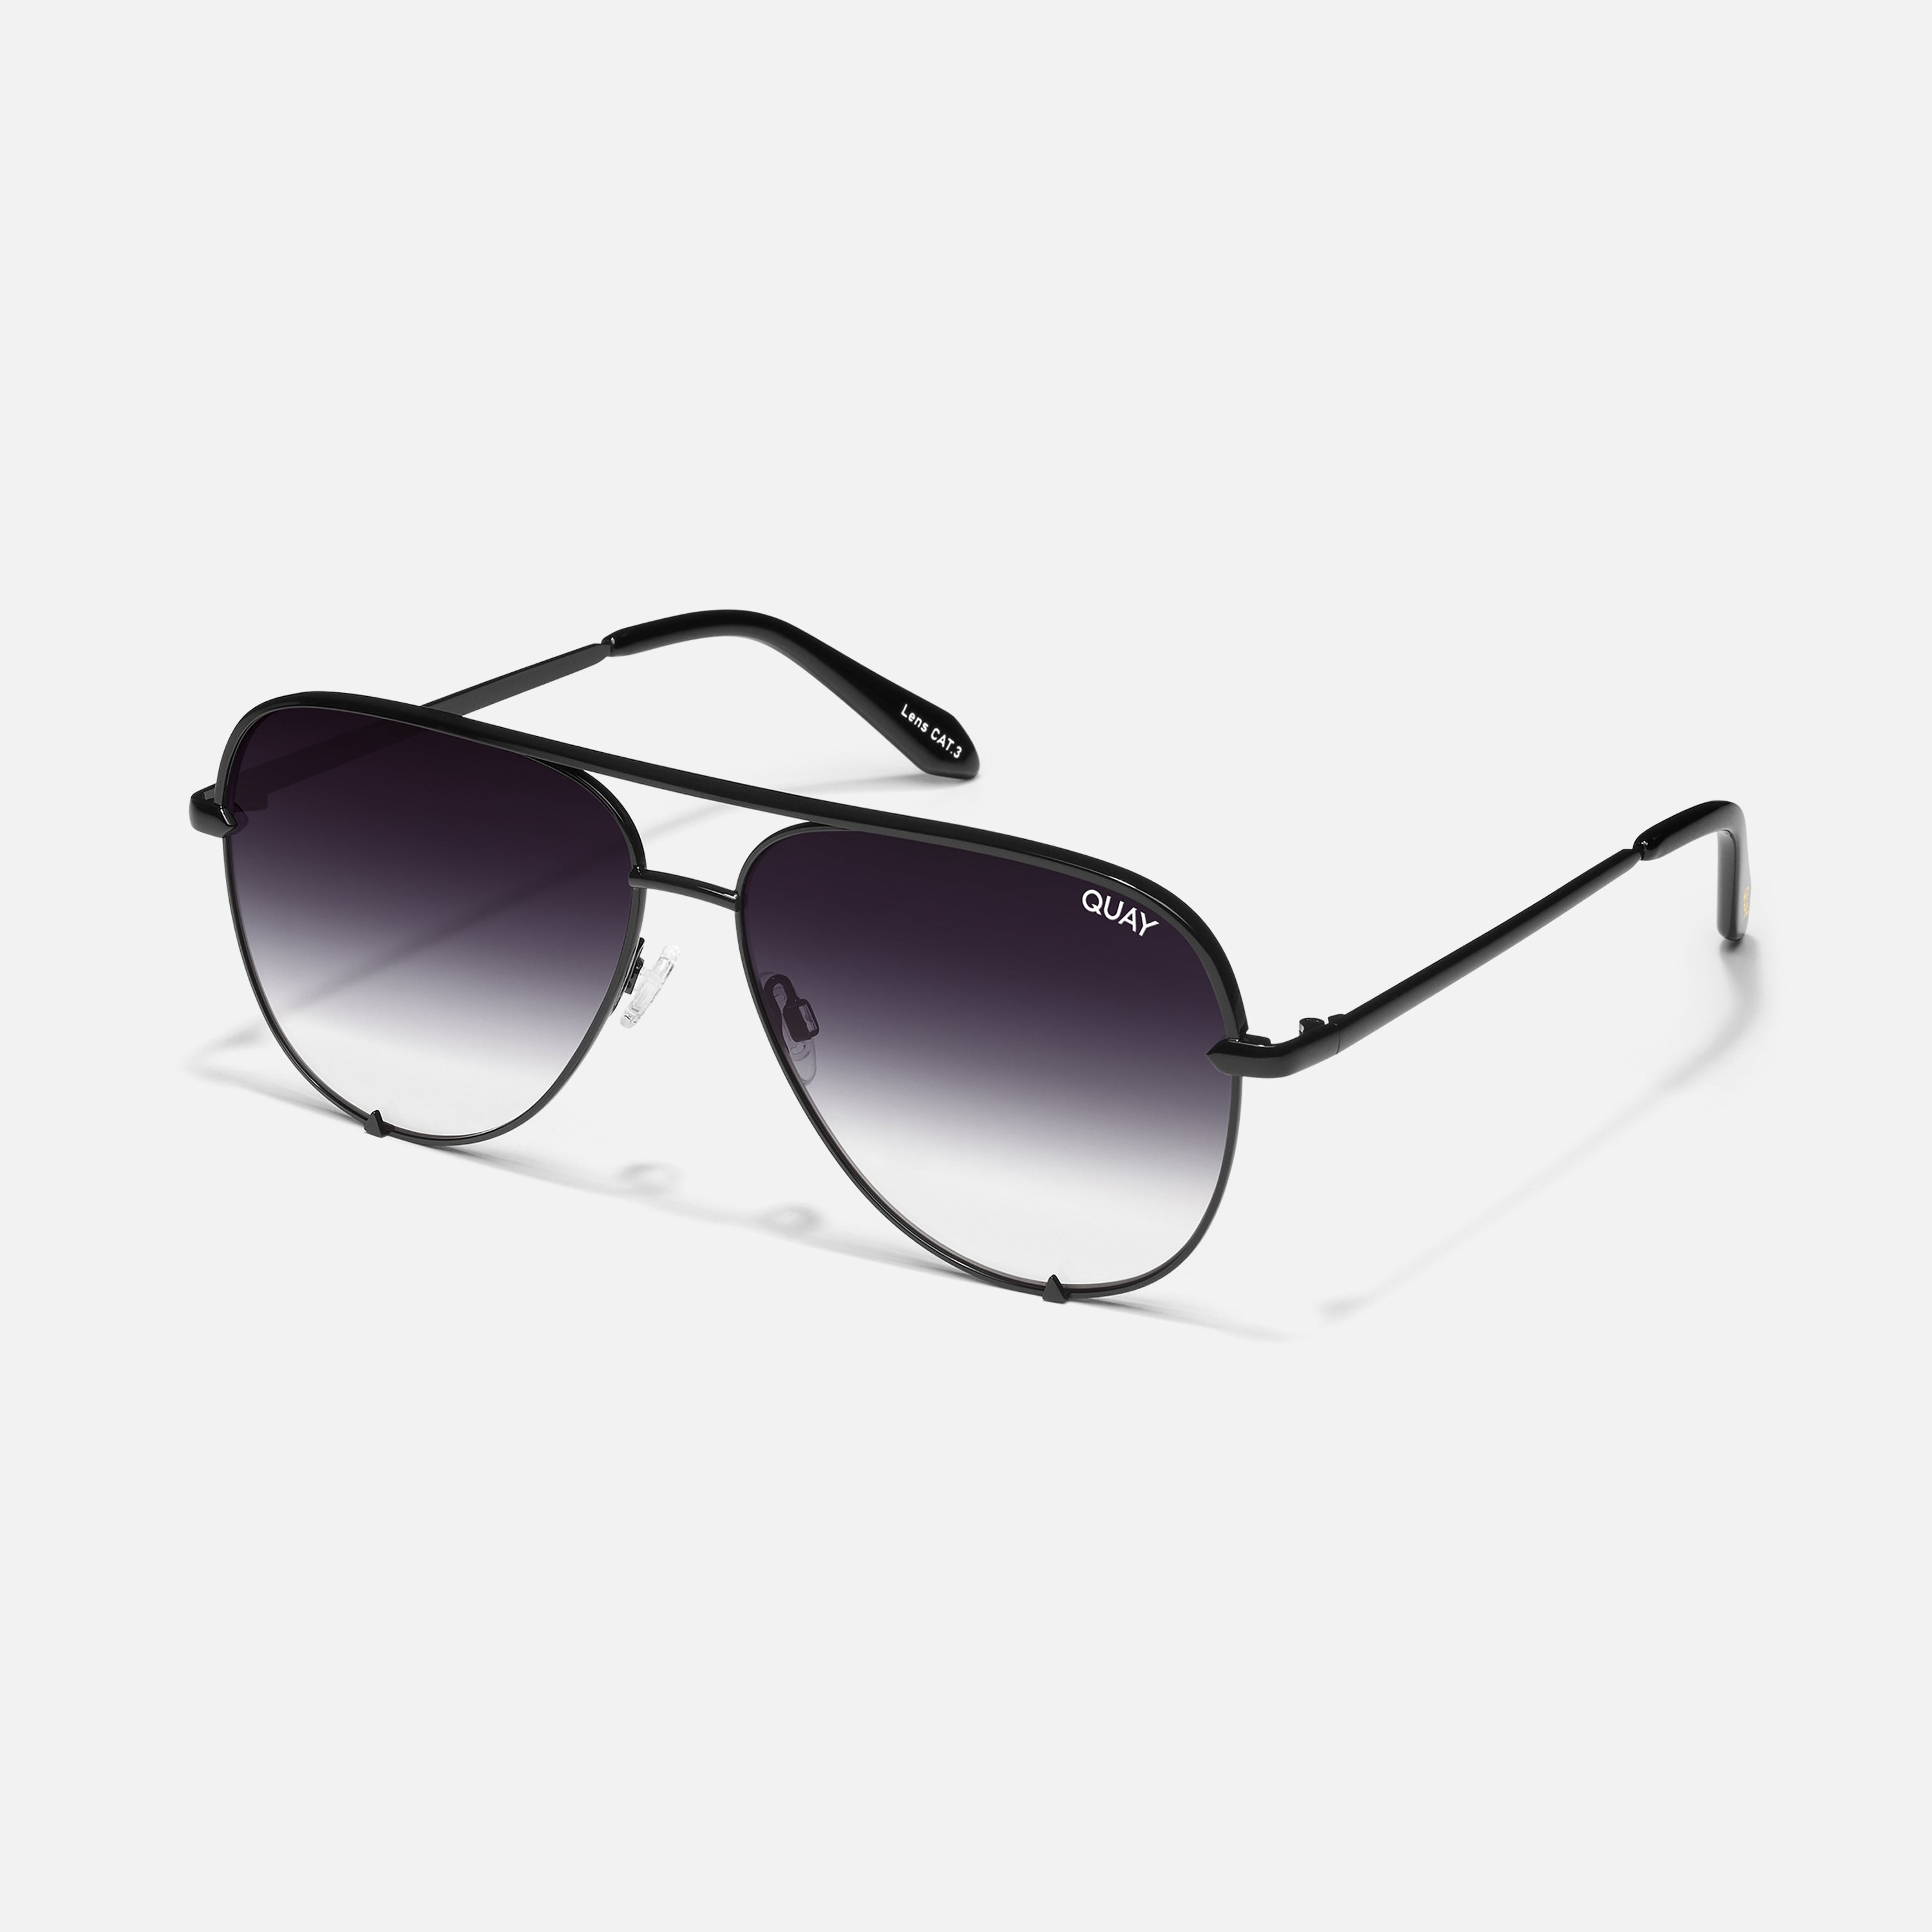 Buy Latest Quay Sunglasses Online In New Zealand - Black / Smoke Polarized  Mens NIGHTFALL